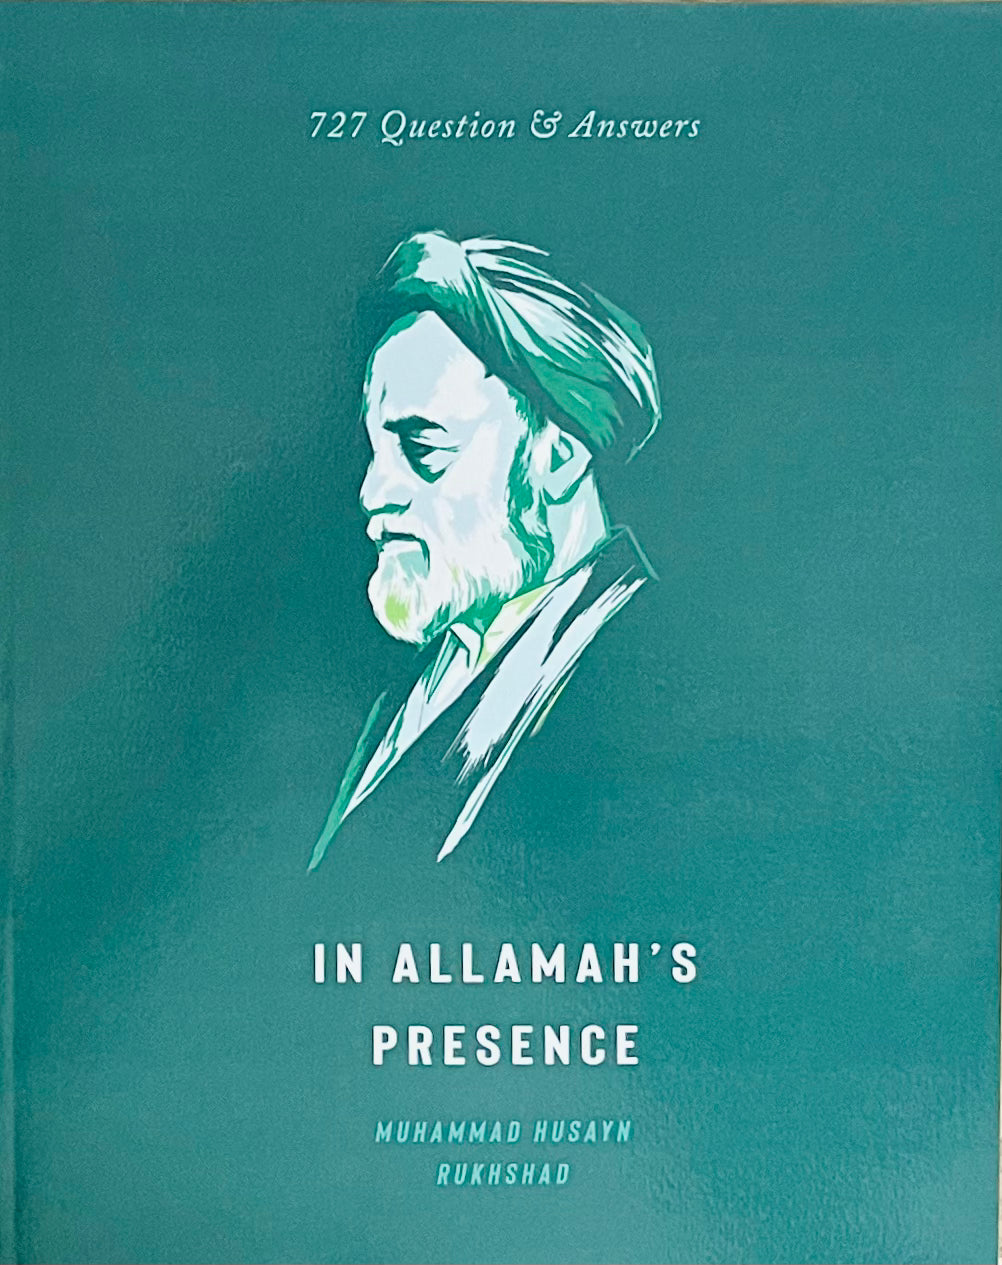 In Allamah’s Presence